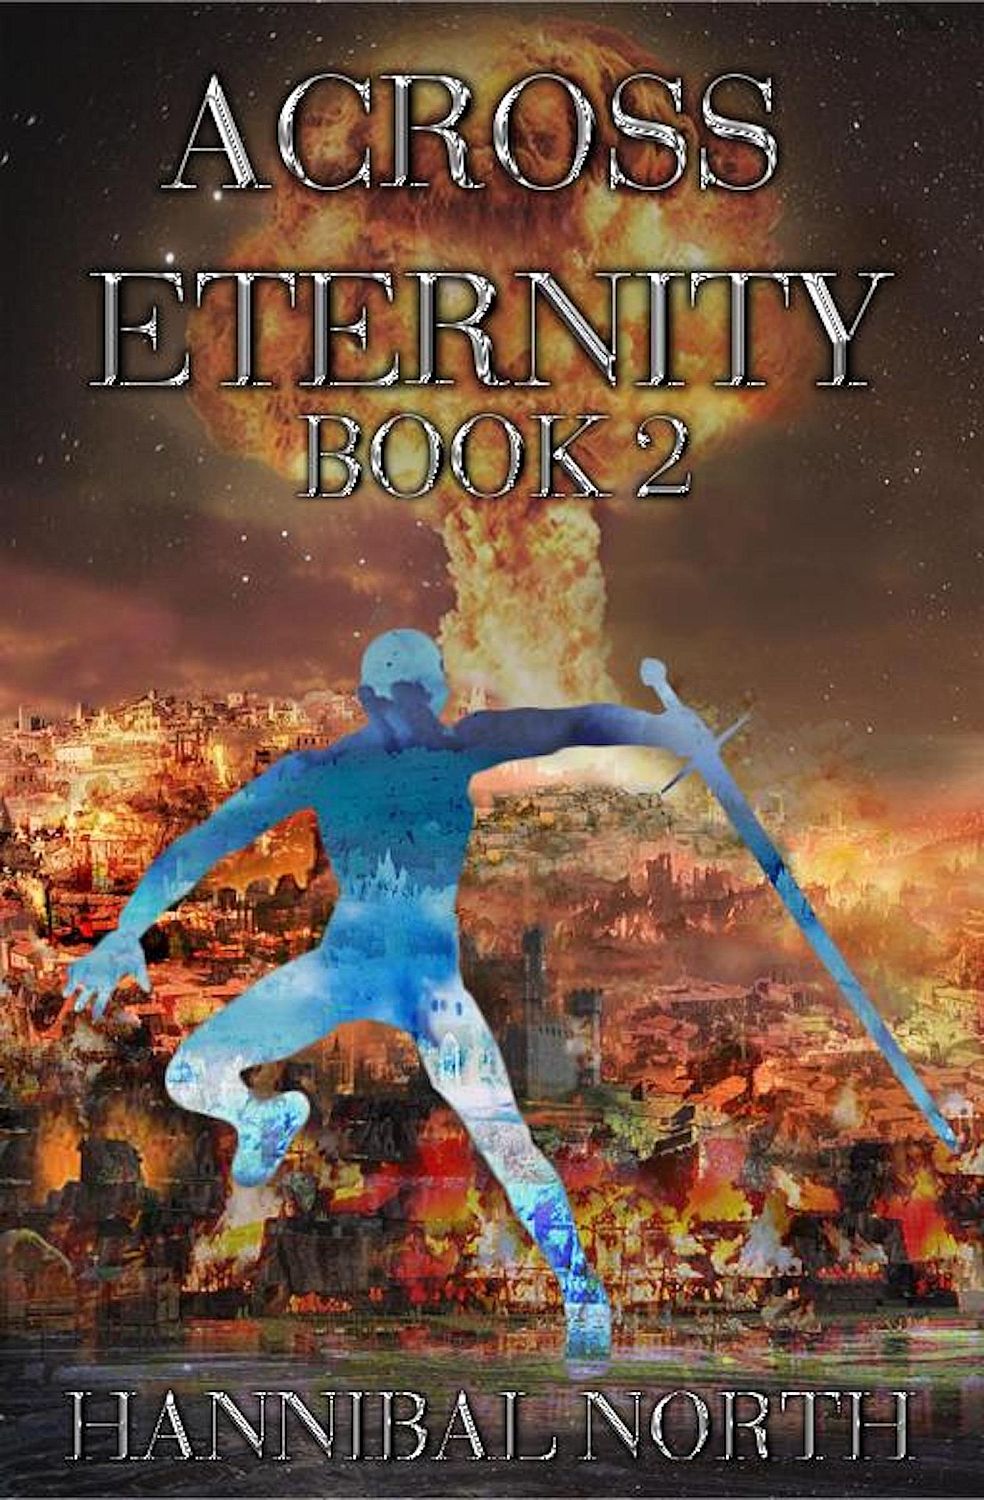 Across Eternity: Book 2 - Cover